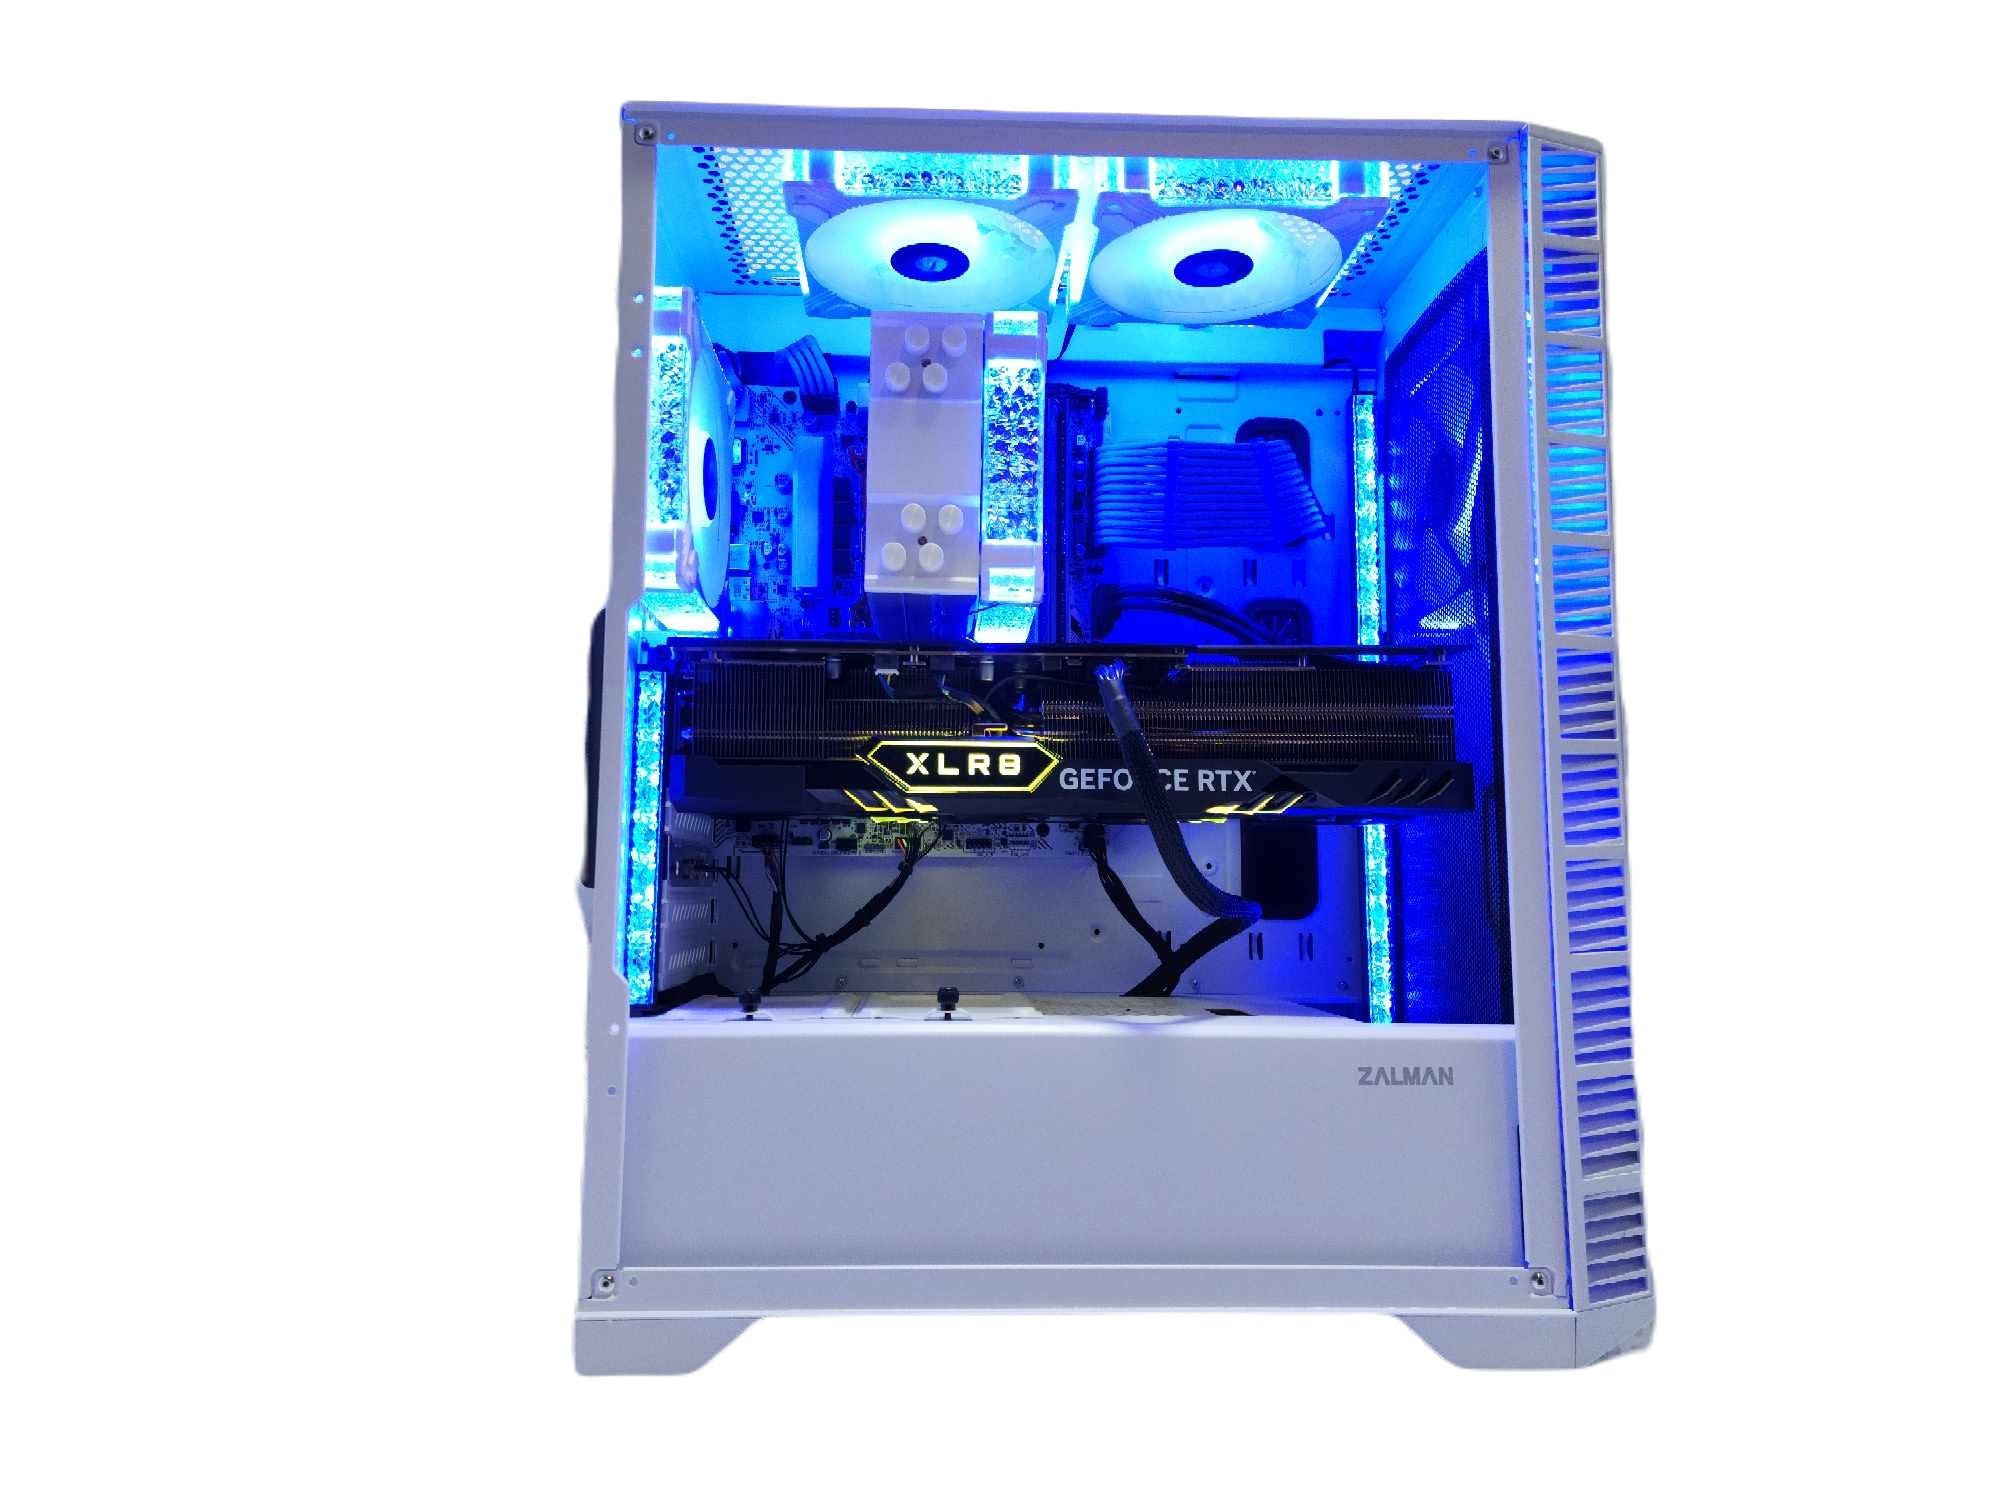 Laufey XIII Gaming PC Intel i7 NVIDIA RTX 4080 1TB SSD 32GB DDR5 White RGB B760 - Geek Tech